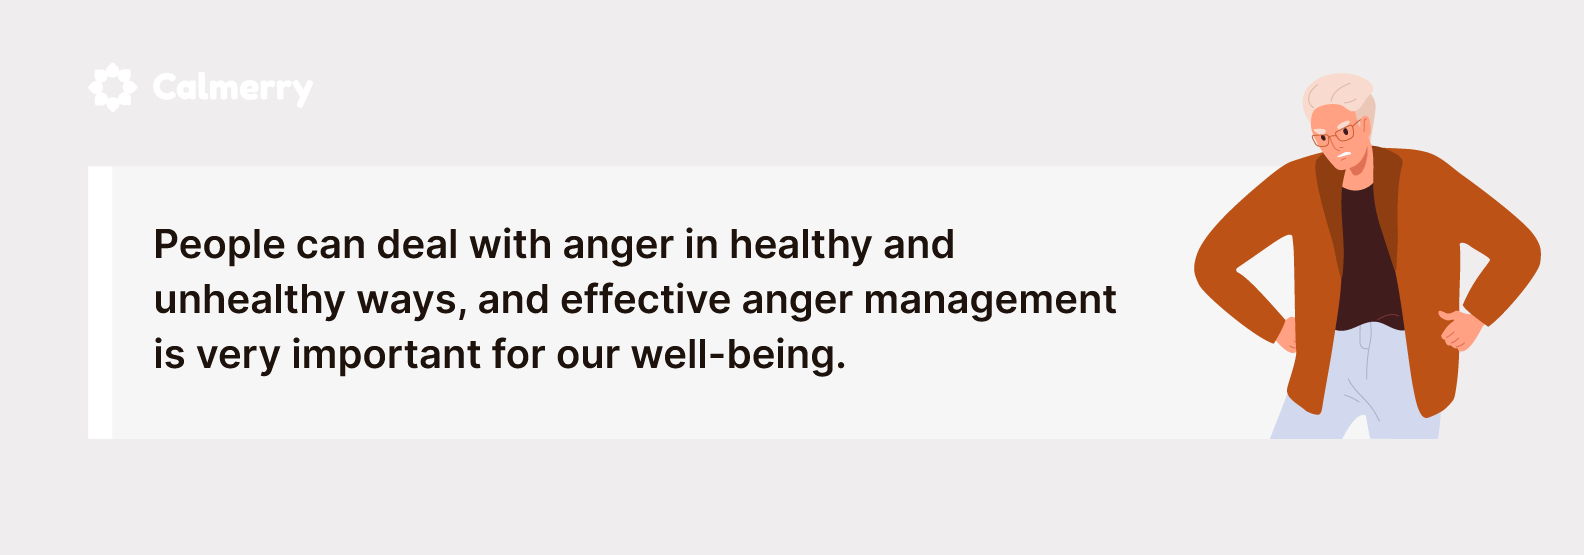 Effective anger management matters